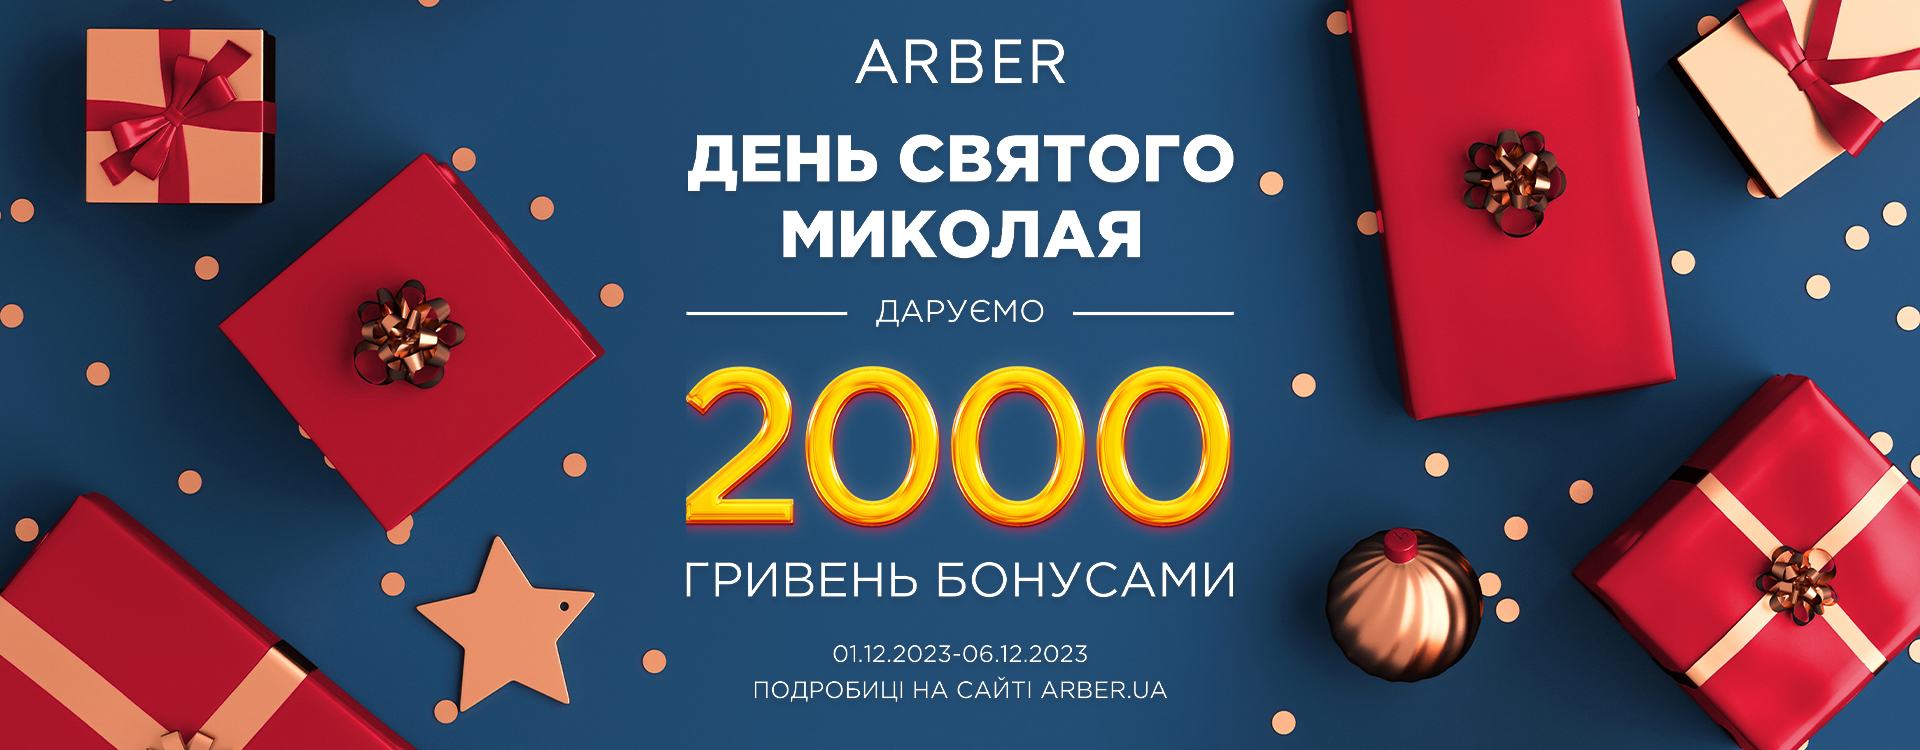 ARBER gives everyone 2000 bonuses